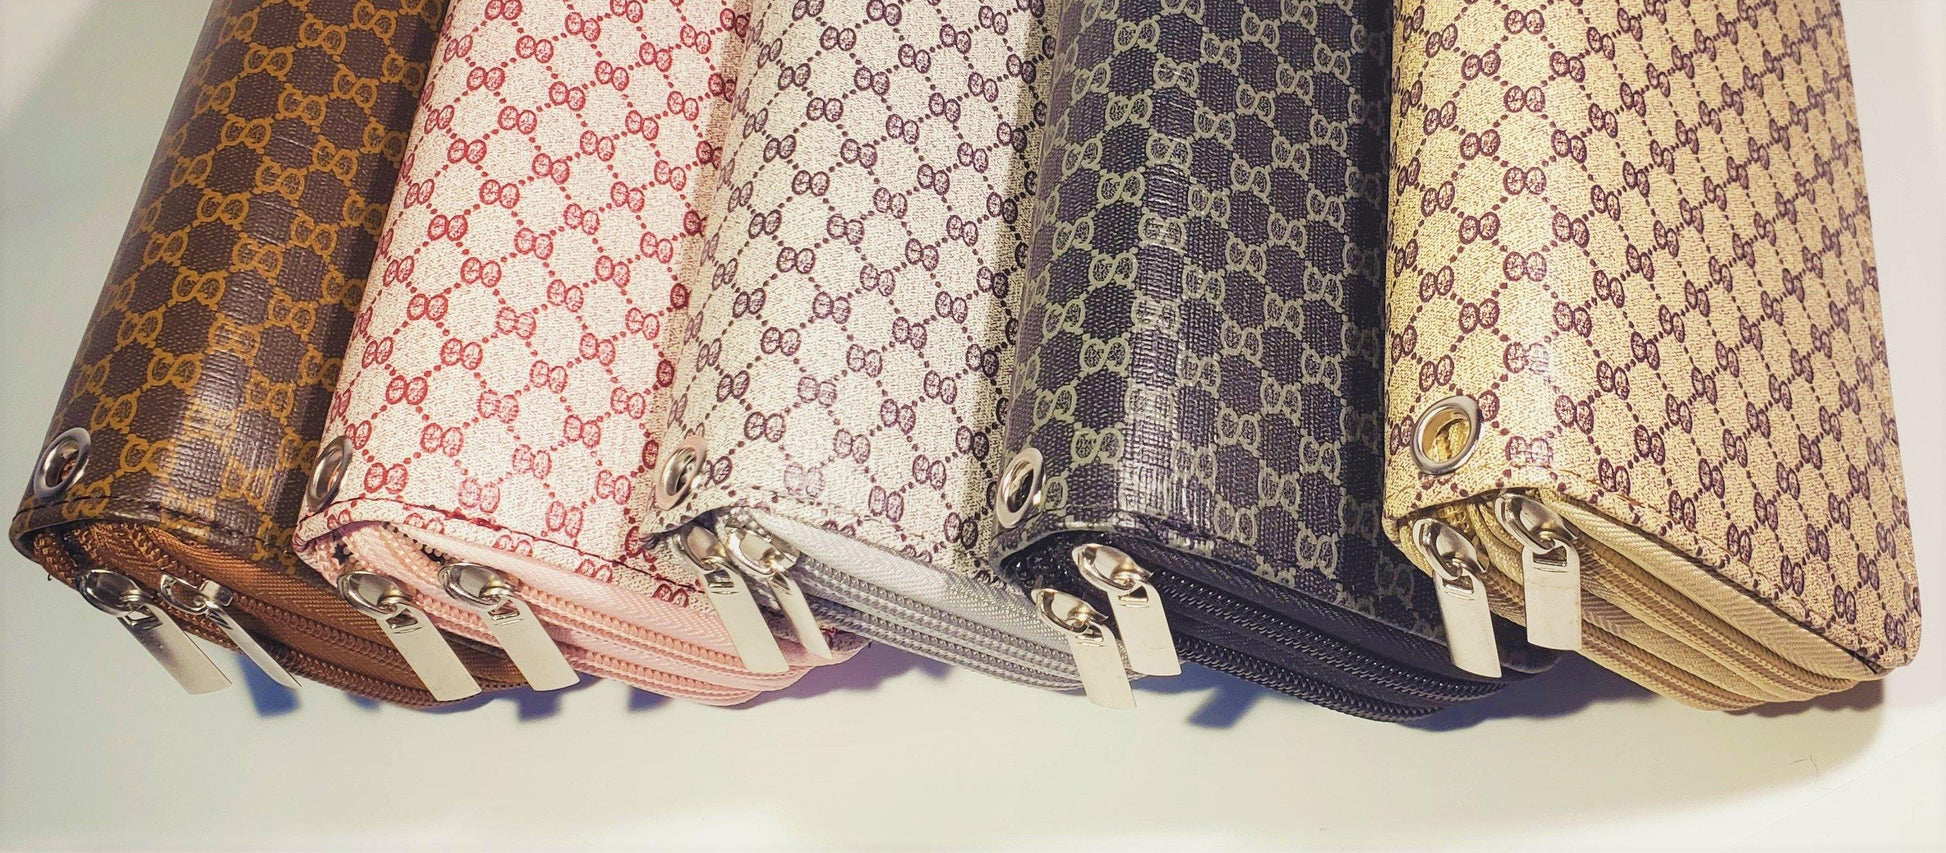 Women Leather Wallet Card Holder Phone Holder Double Zip Wrist Band  Clutch Purse Handbag - TopLine Fashion Lounge